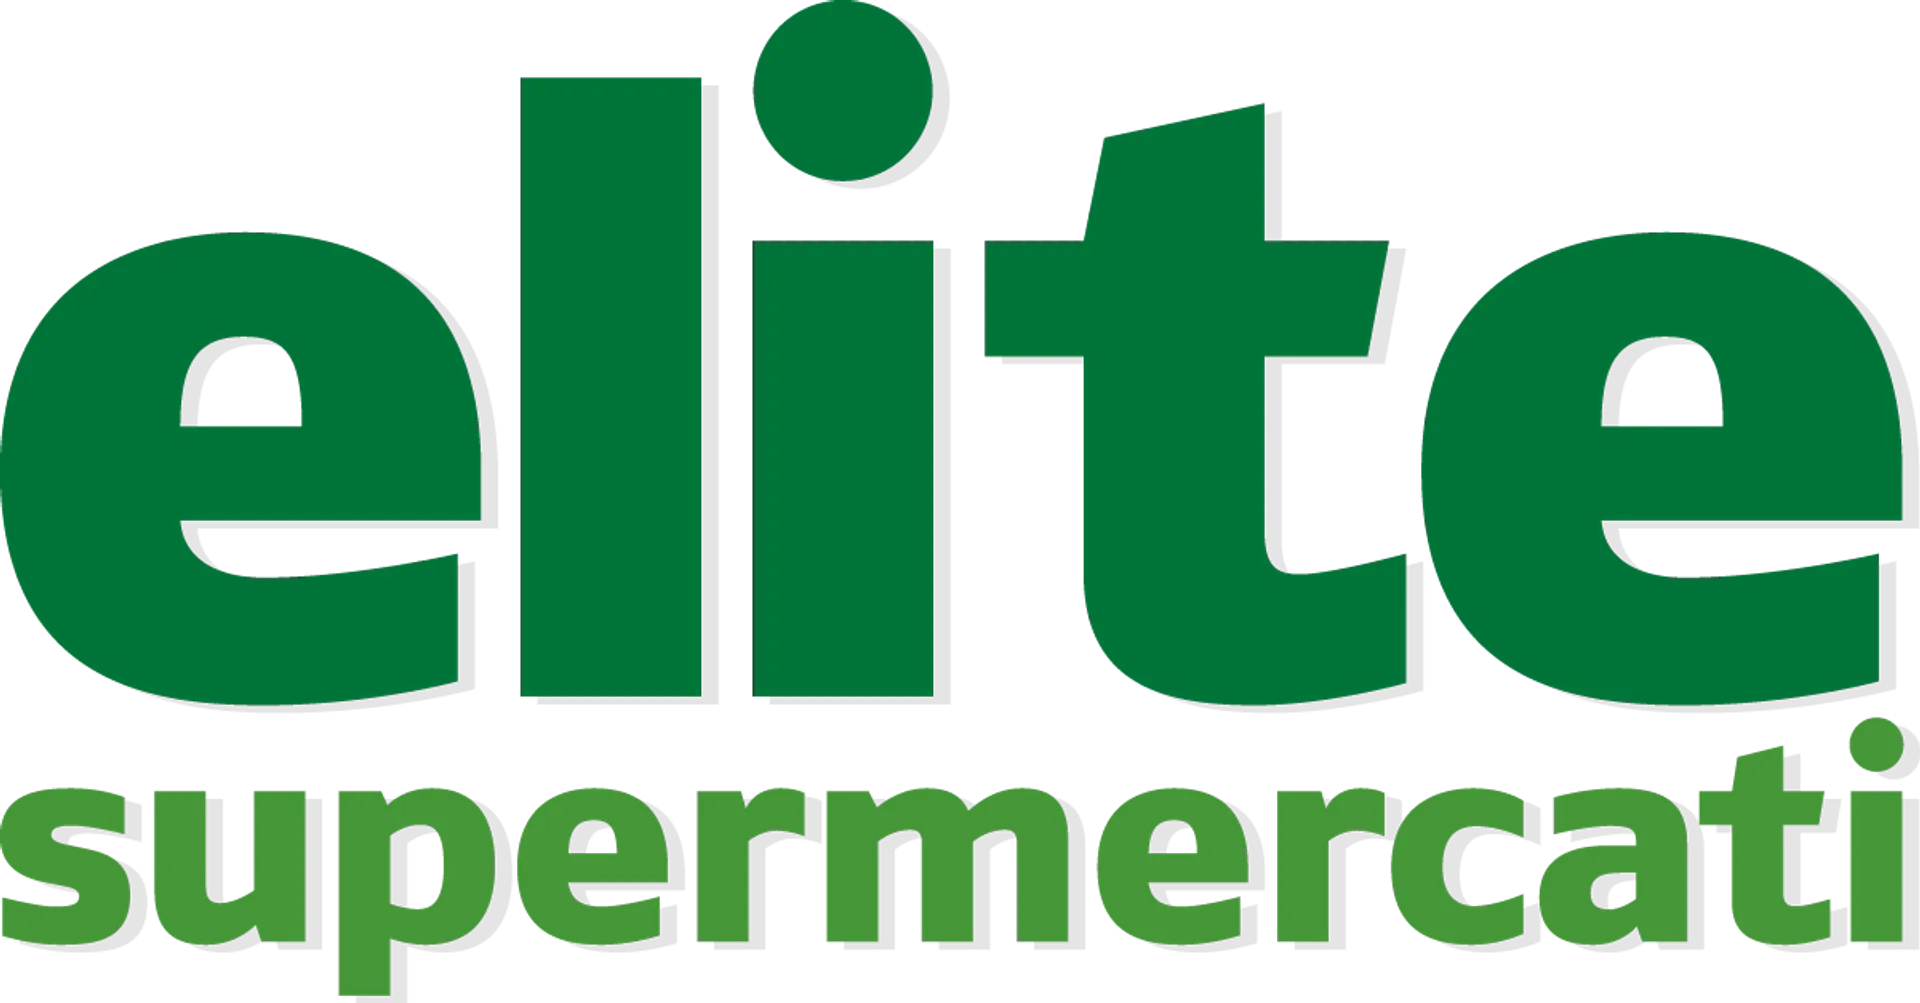 ELITE SUPERMERCATI logo